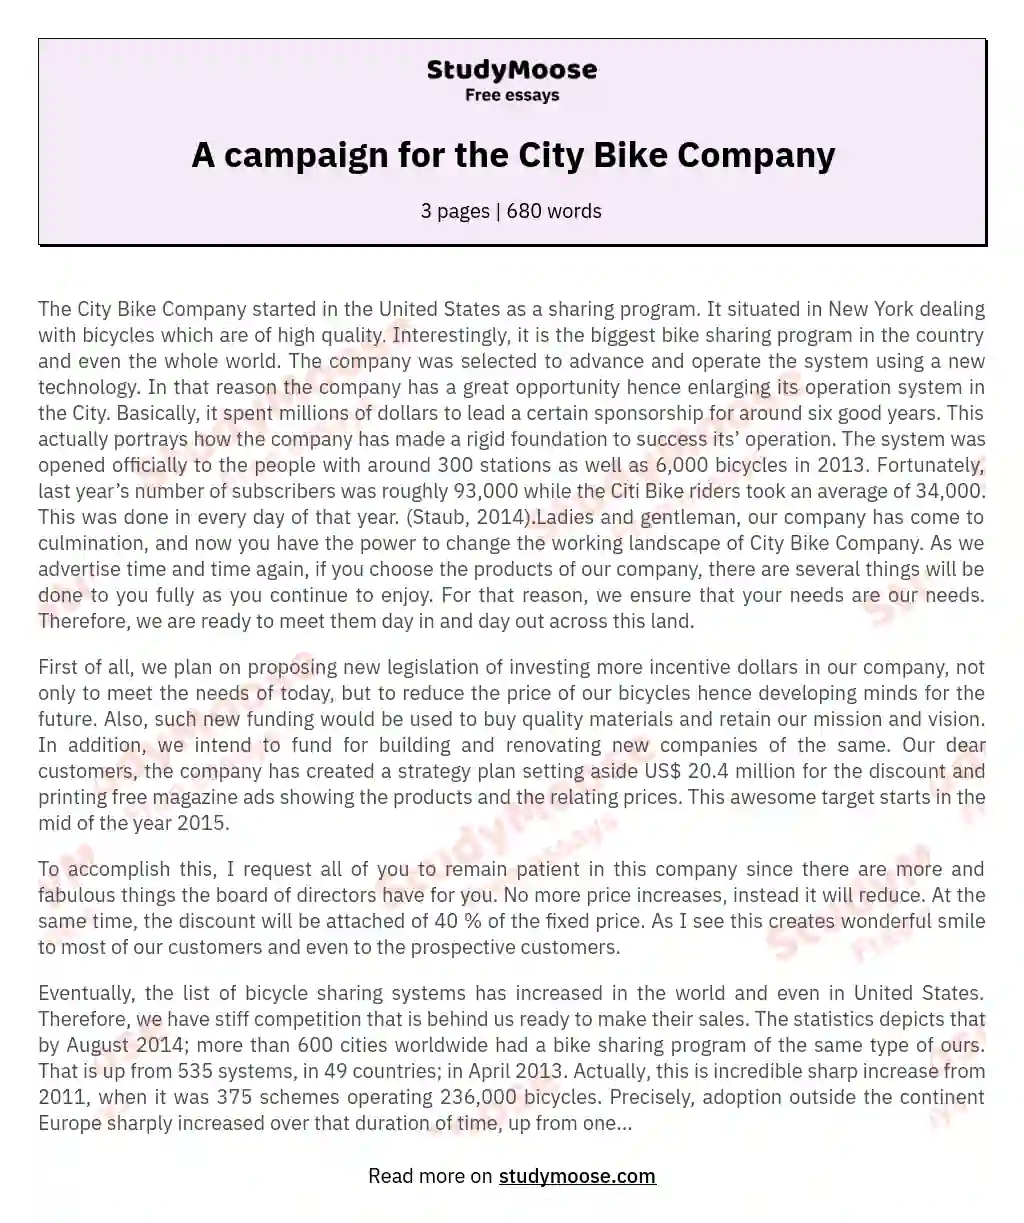 A campaign for the City Bike Company